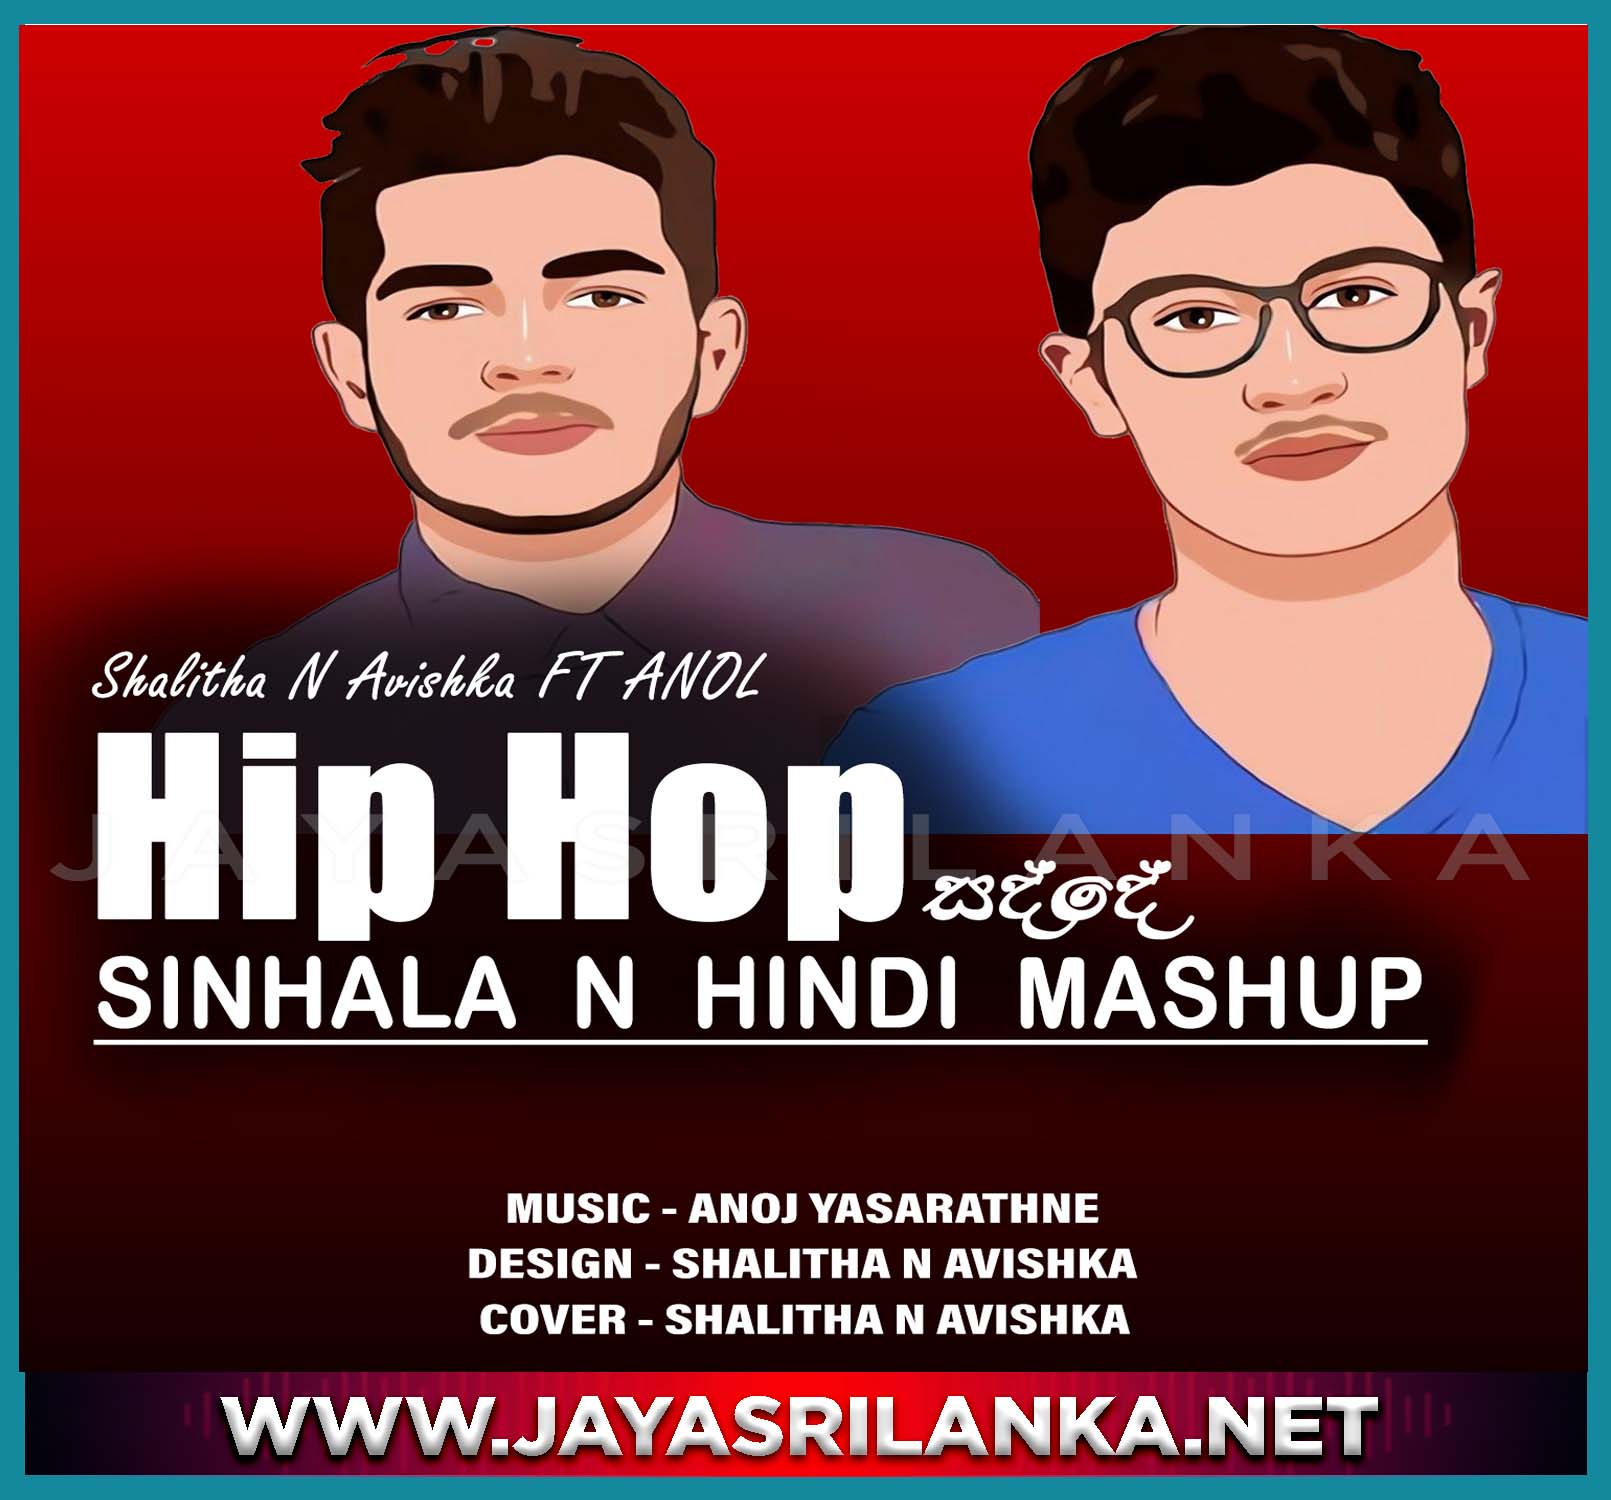 Sinhala N Hindi Mashup Cover